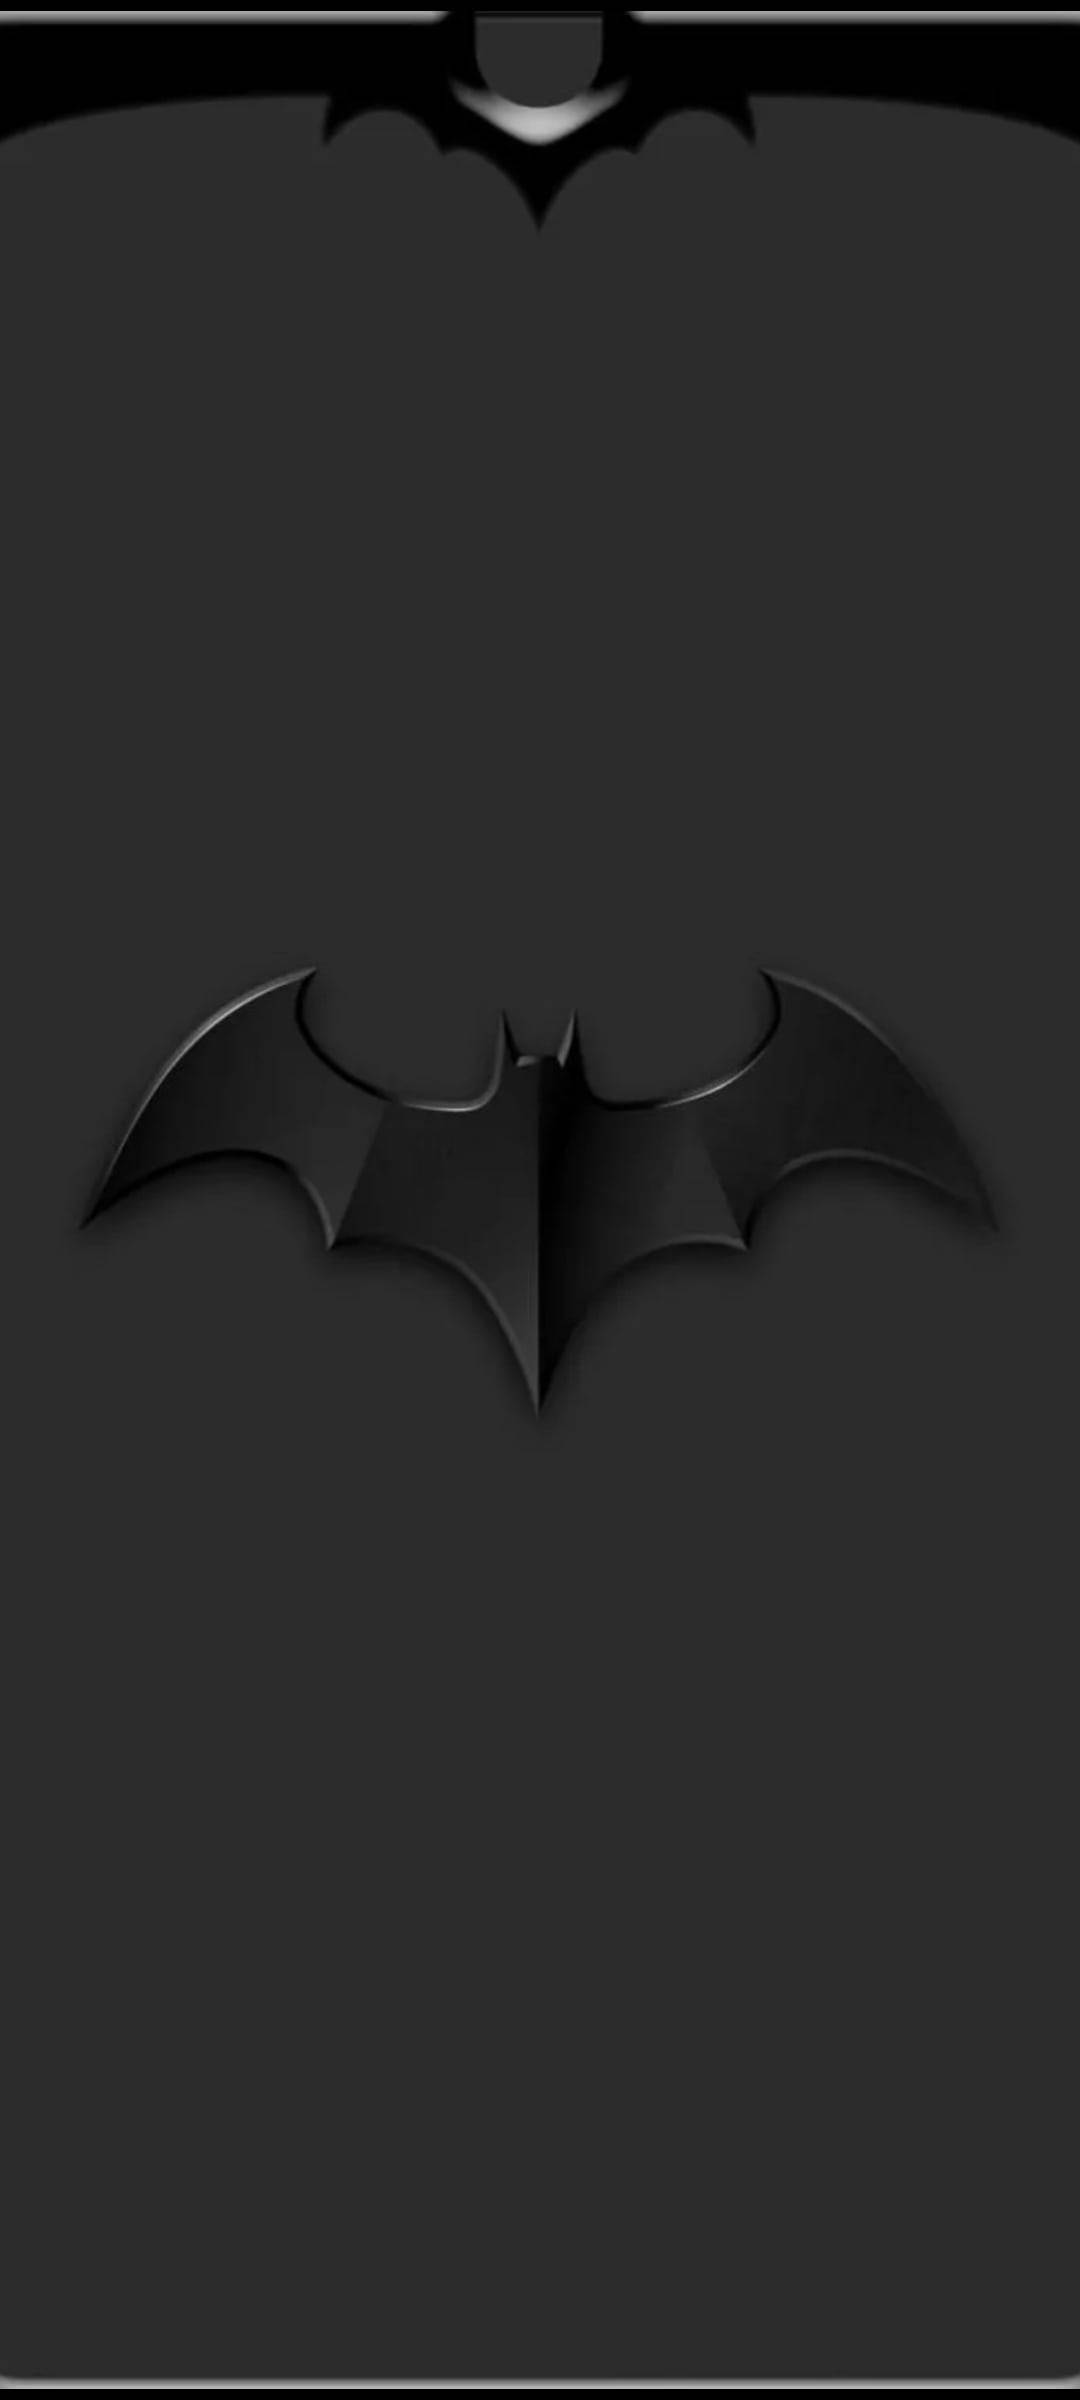 Dot Notch Batman's Bat Symbol